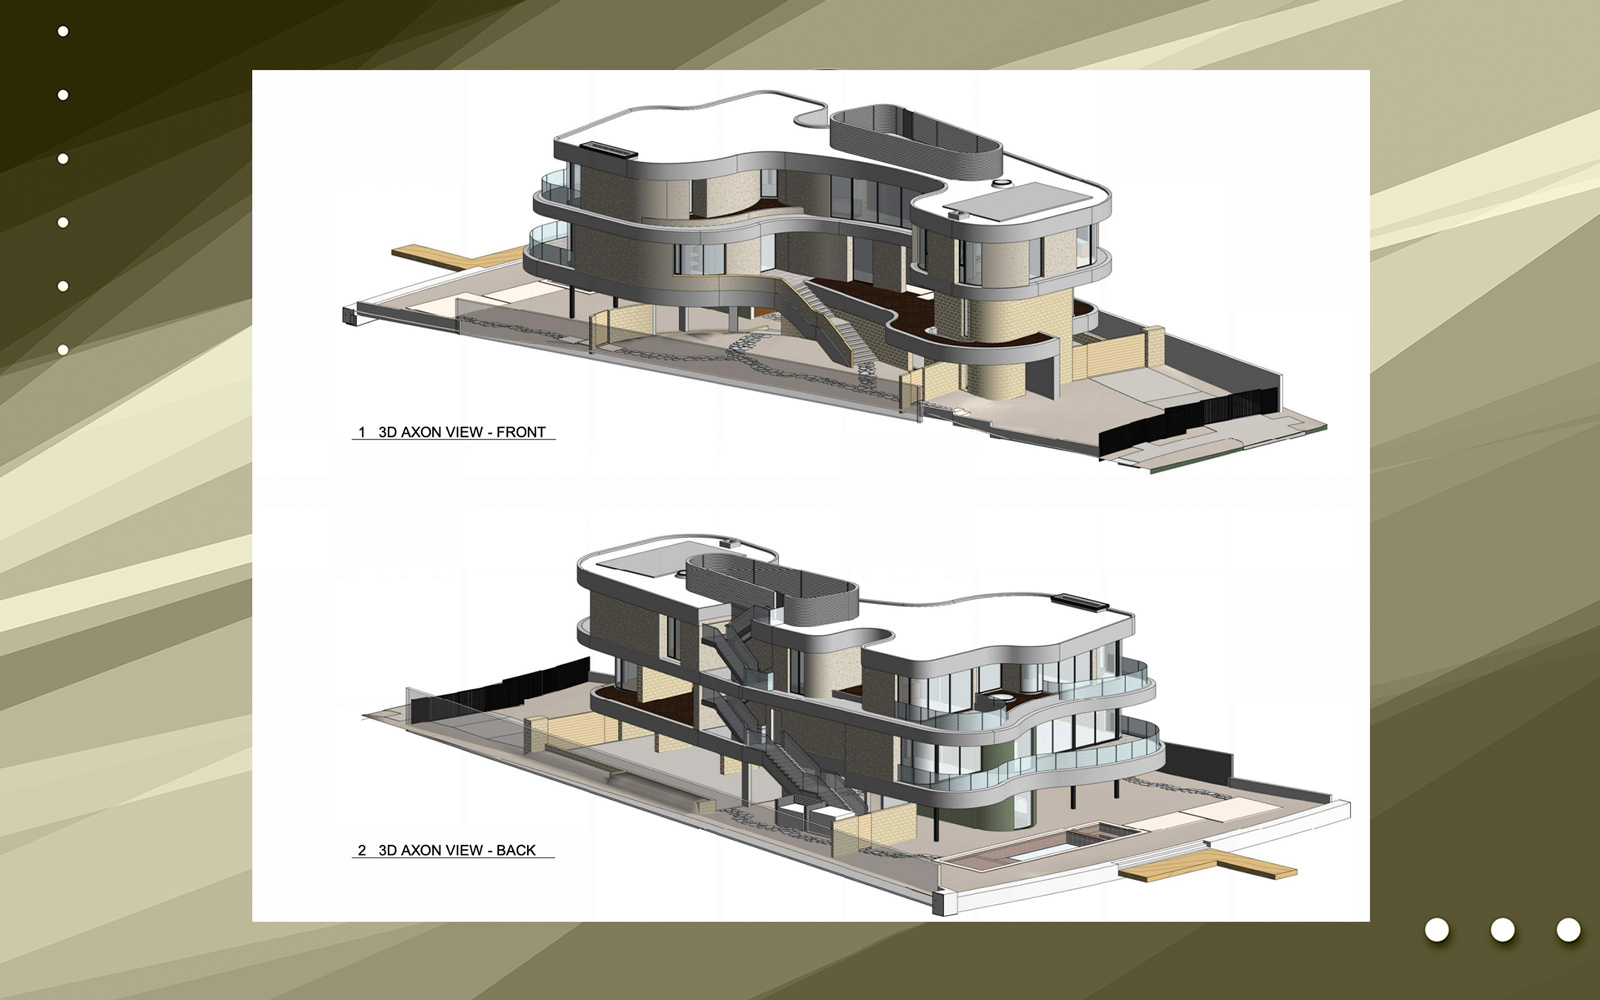 Peter Thiel Wins Approval for Venetian Islands House Design